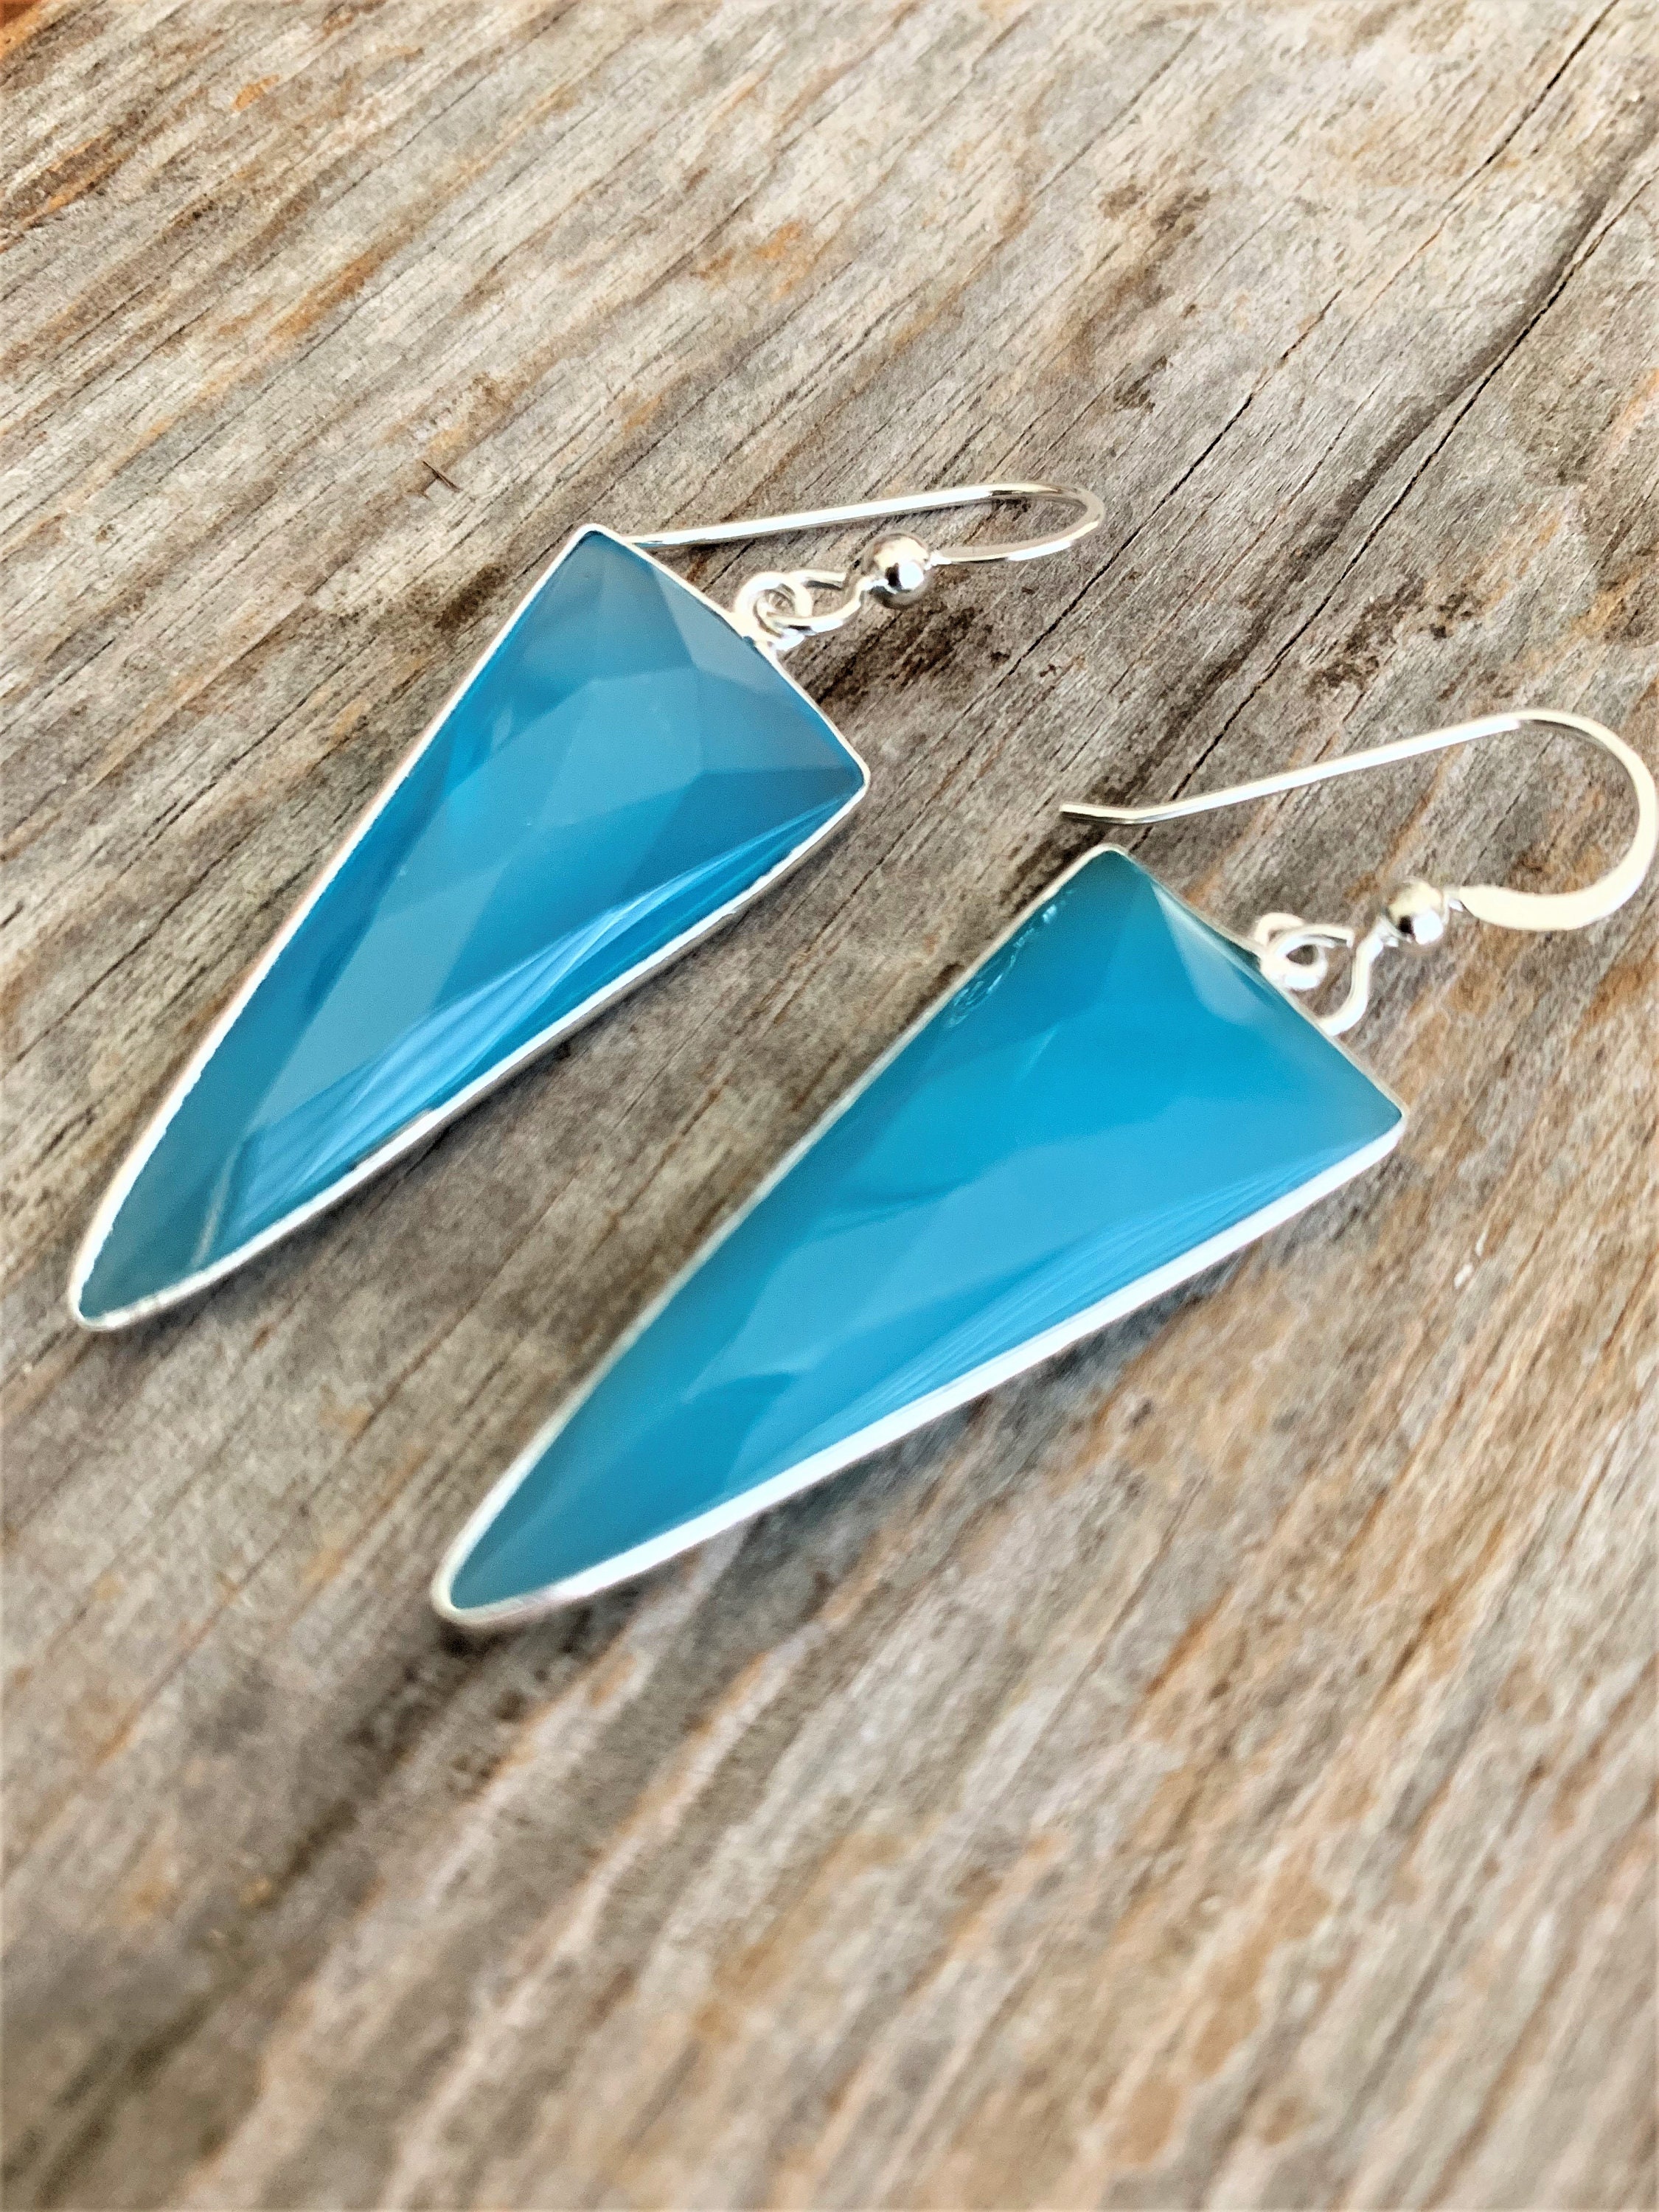 Short Blue Stone Drop Earrings with Sterling Silver Ear Wires Triangle Simple Blue Chalcedony Gemstone Dangle Earrings for Women